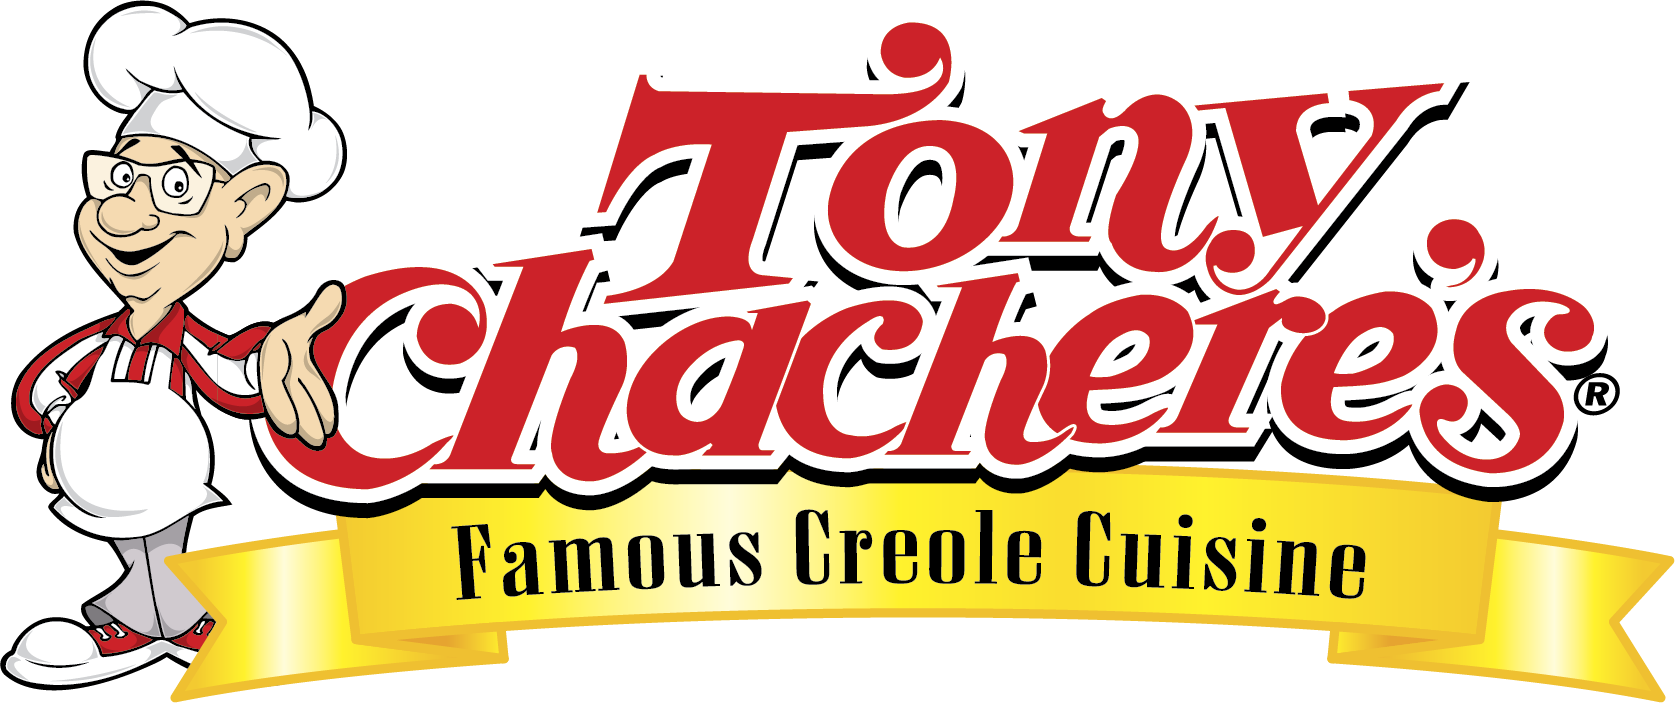 Tony Chachere’s Famous Creole Cuisine's Image